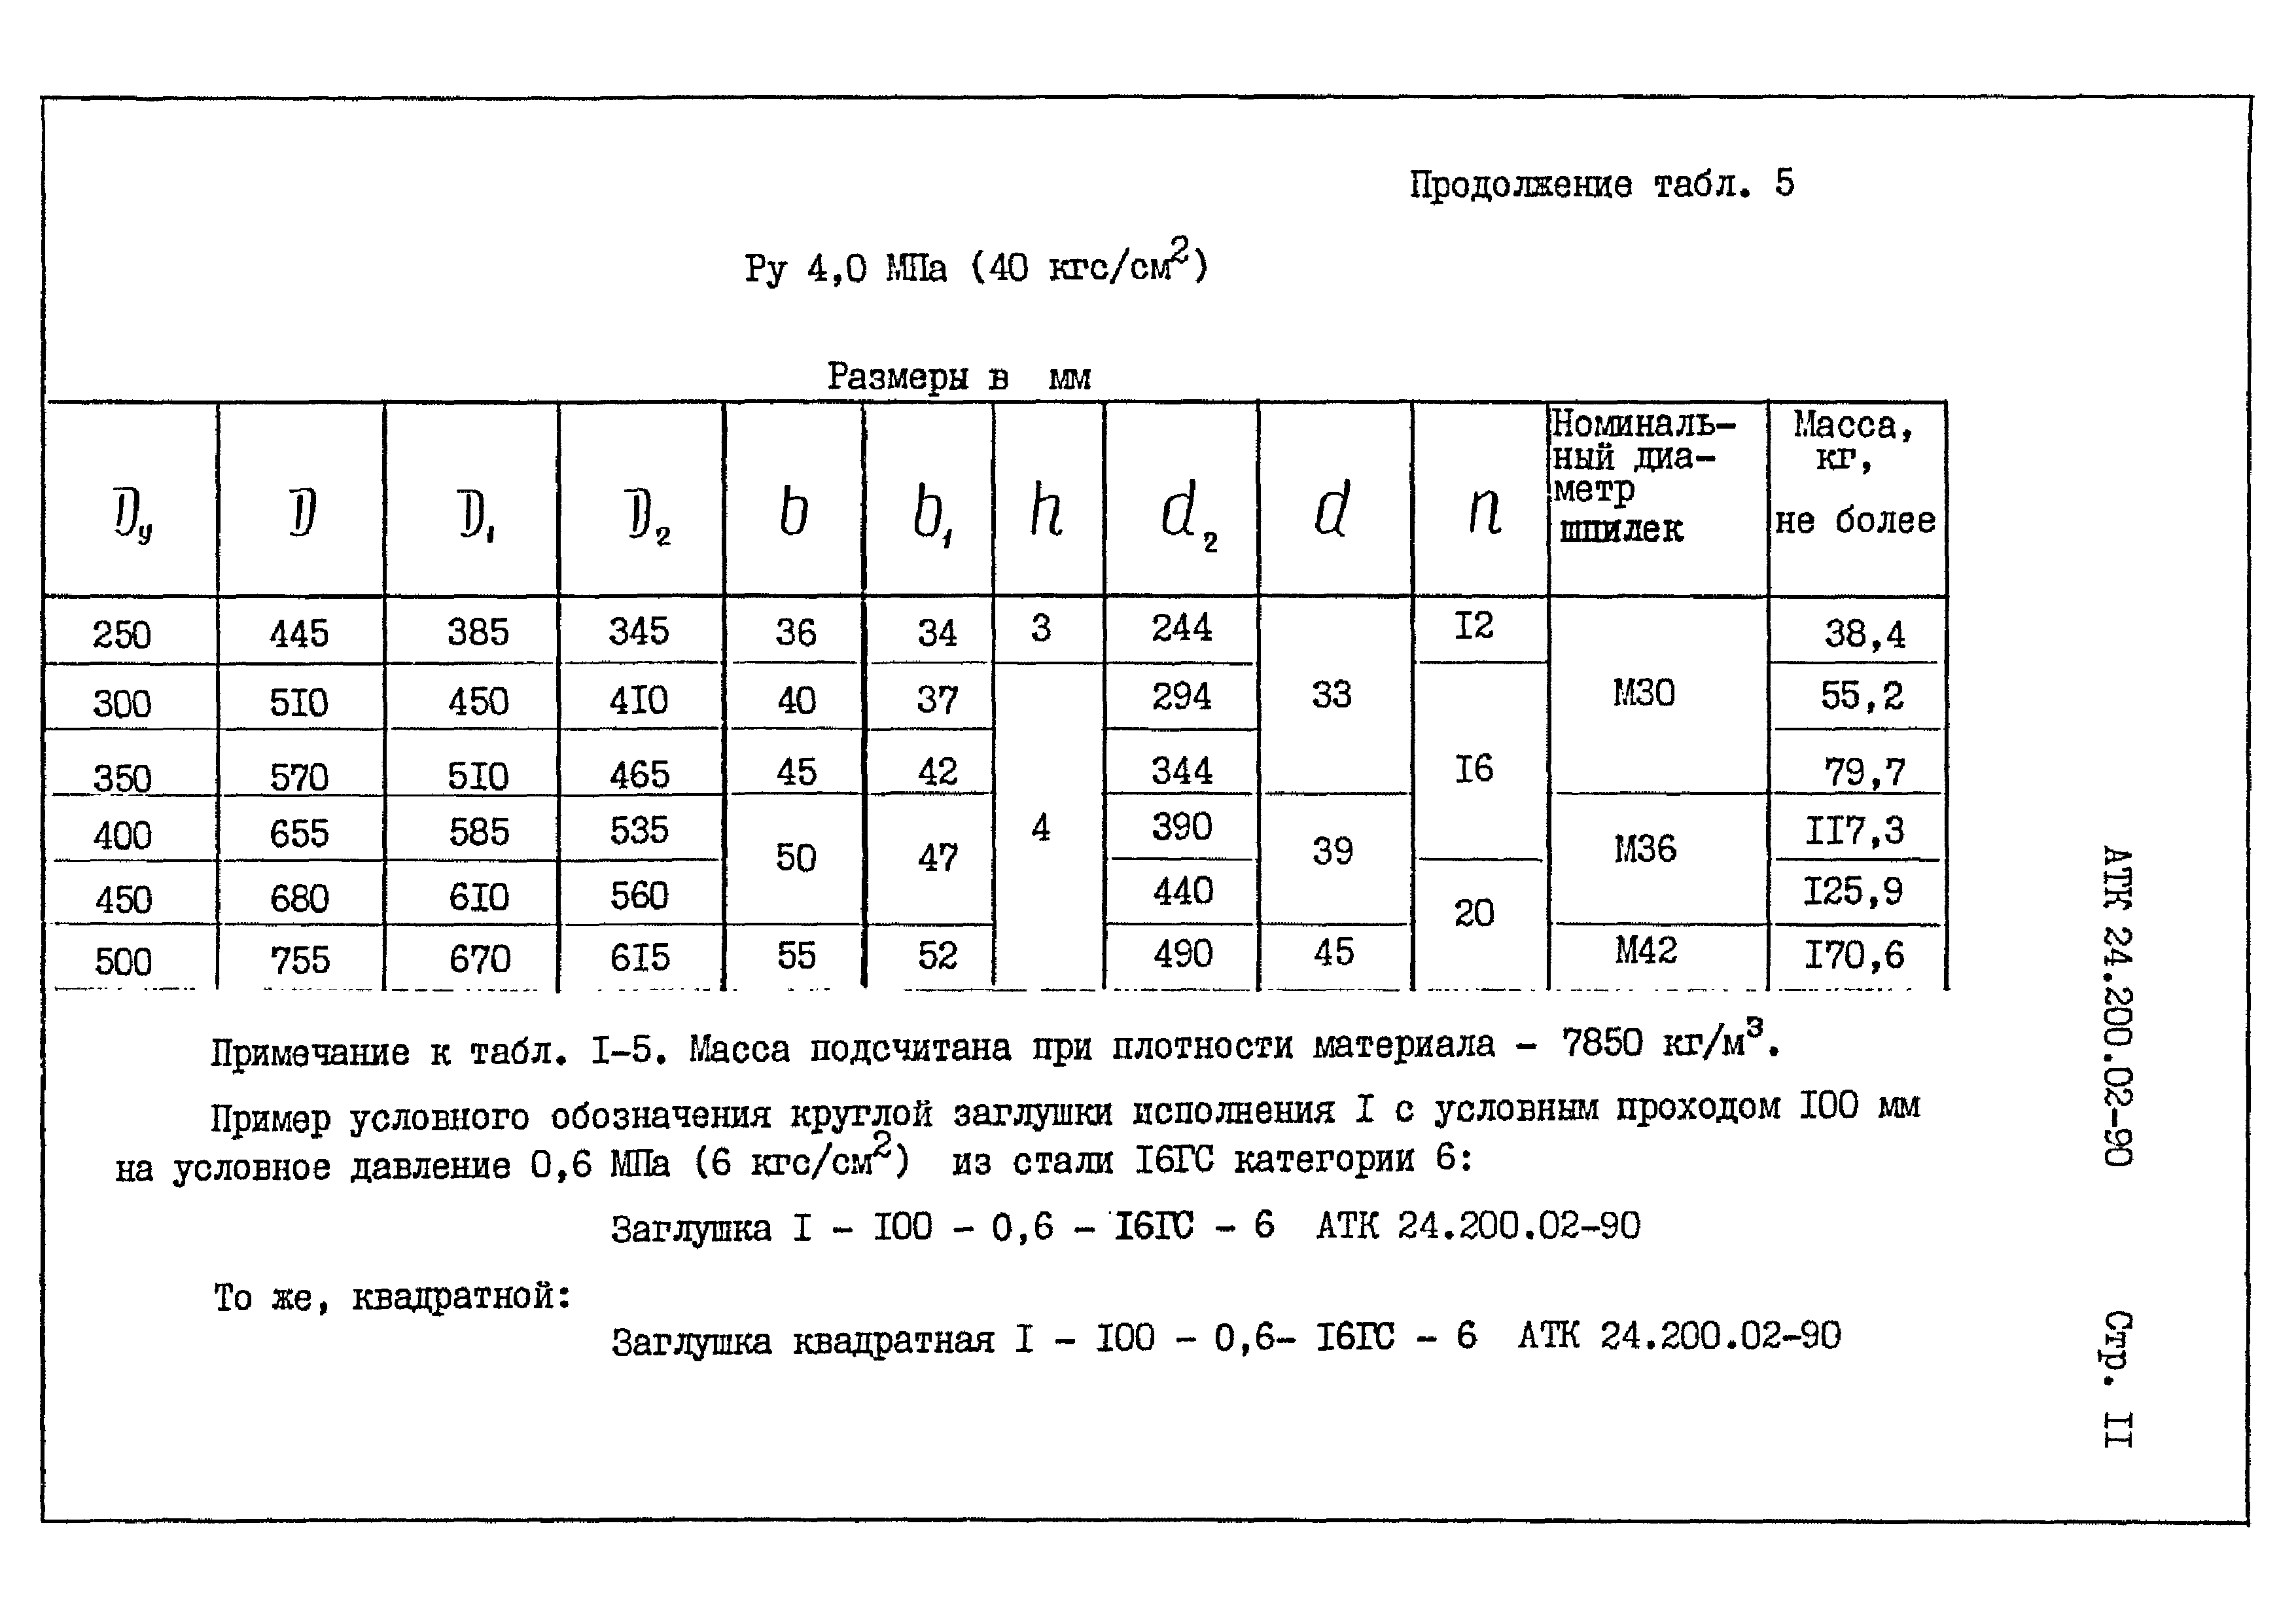 АТК 24.200.02-90